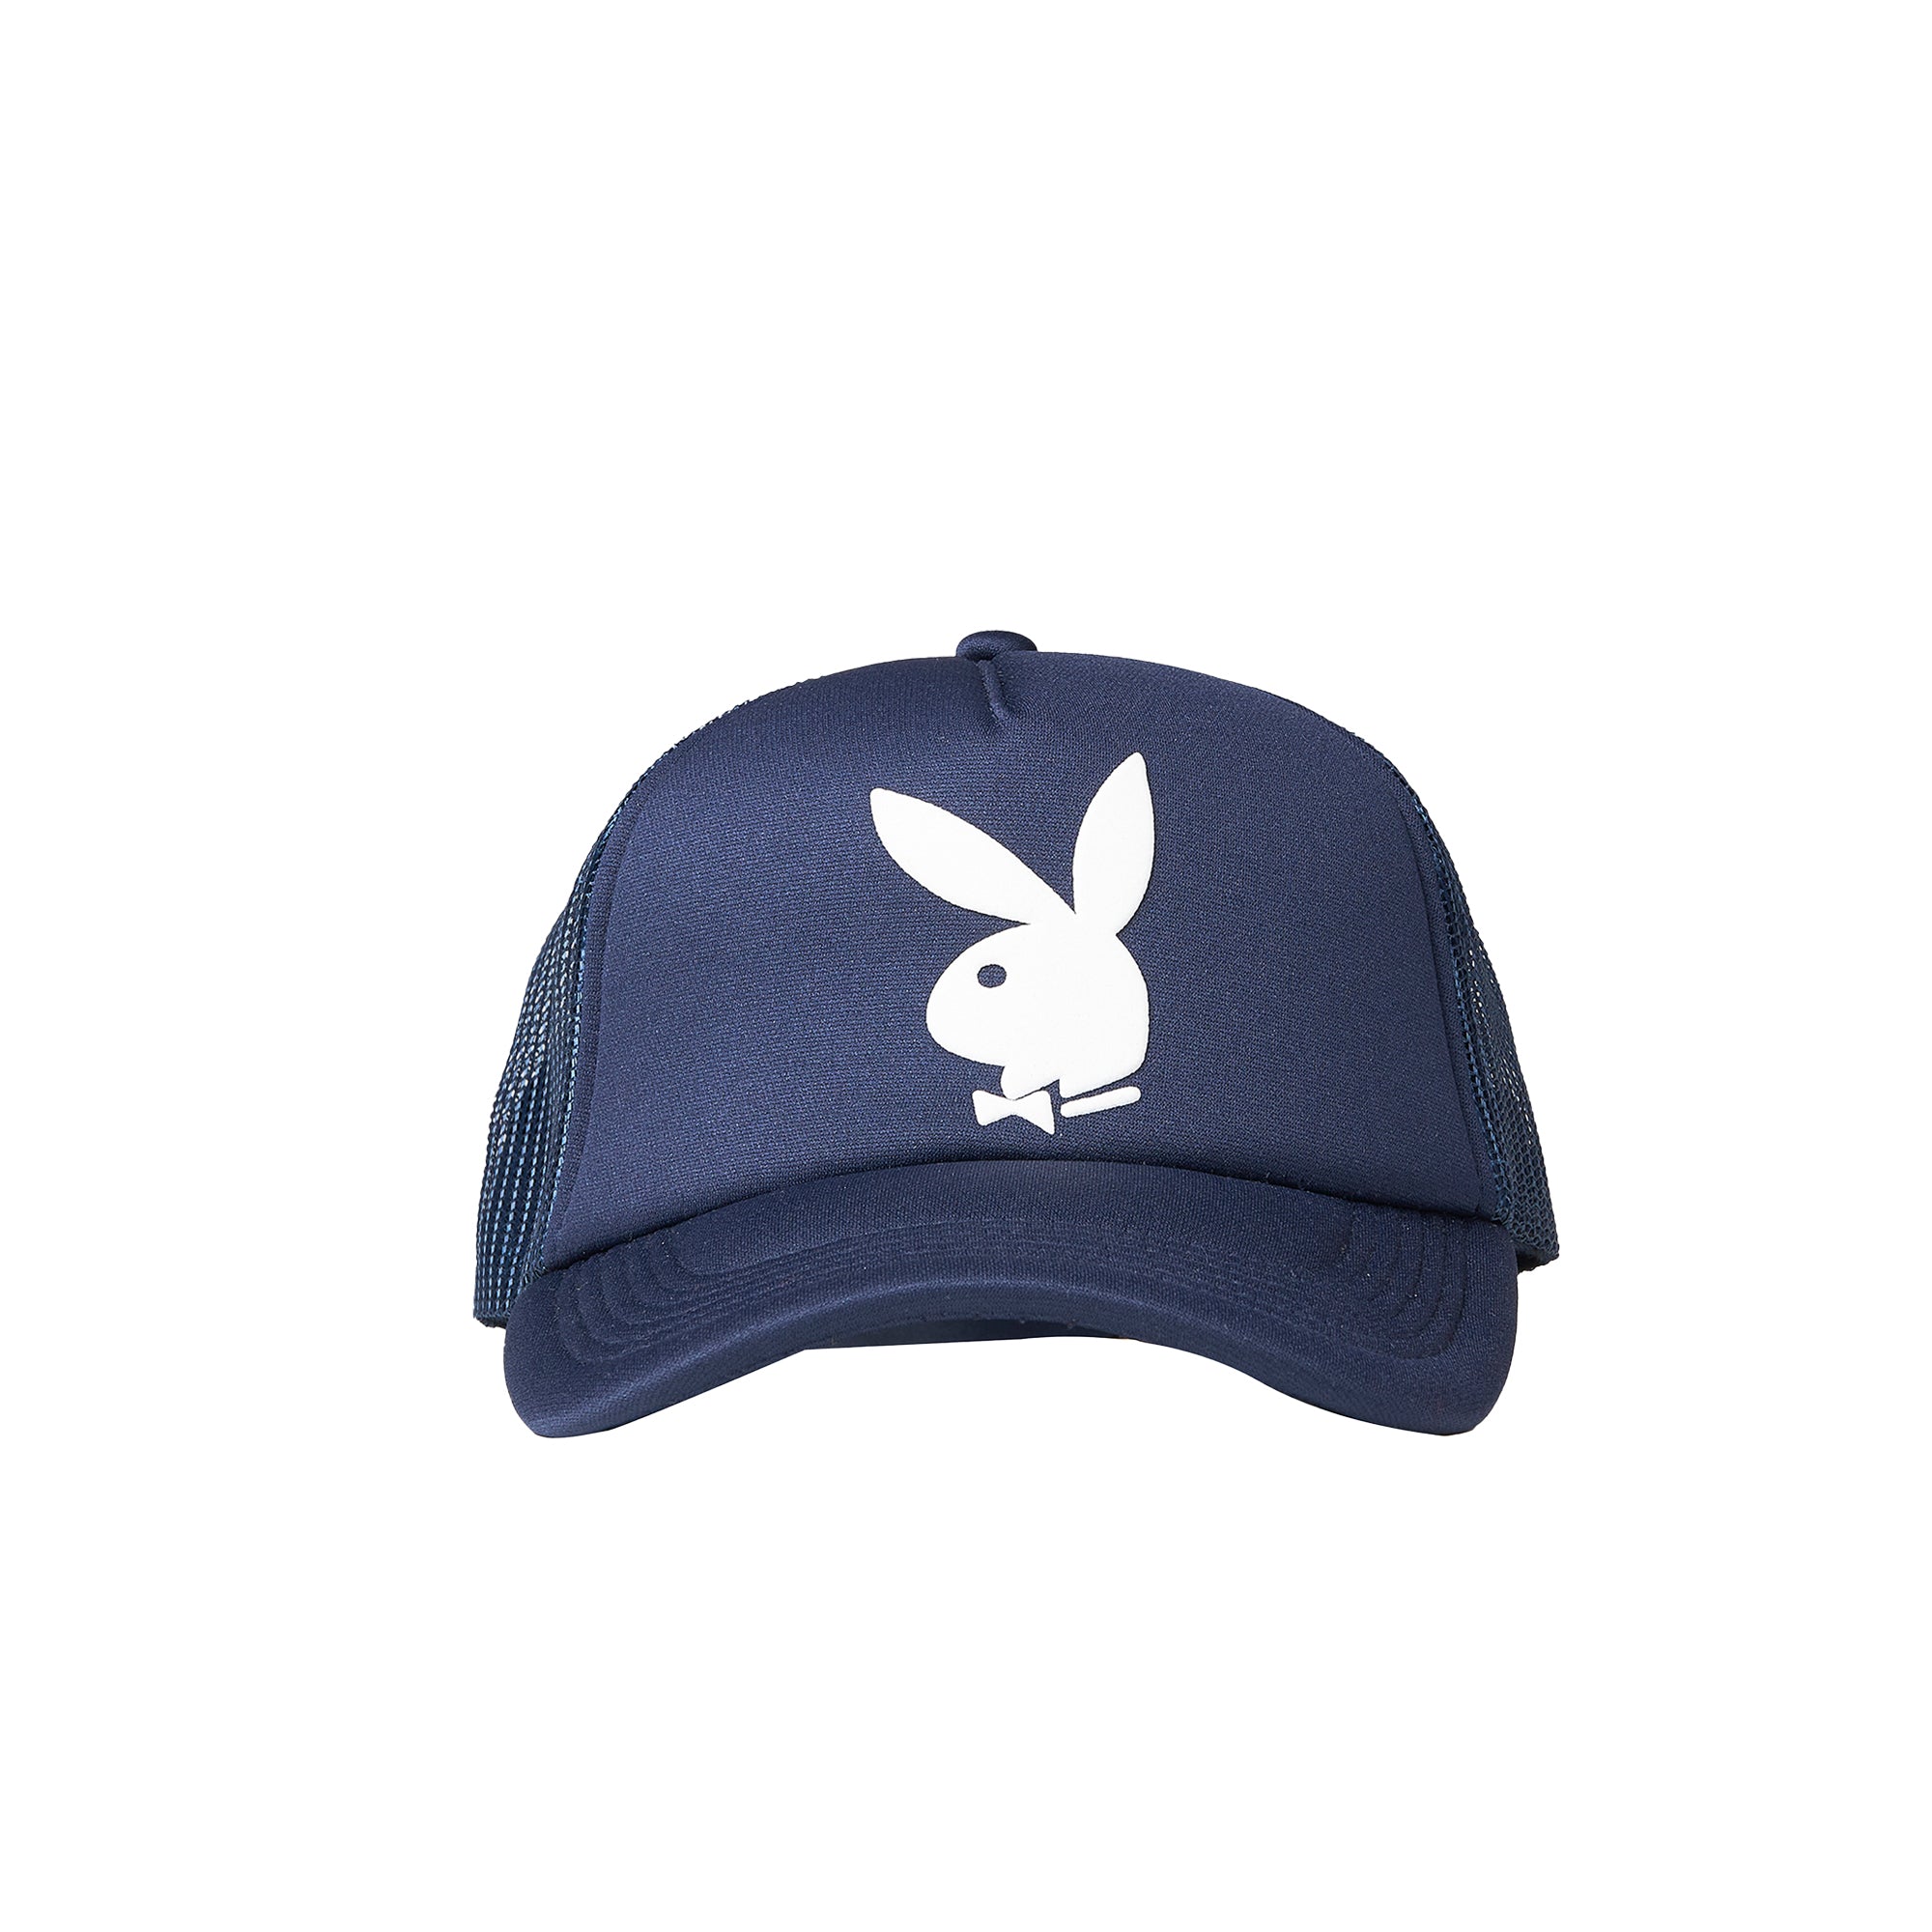 Almost Like New - Playboy, Japan “LV Inspired” Monogram Bucket Hat